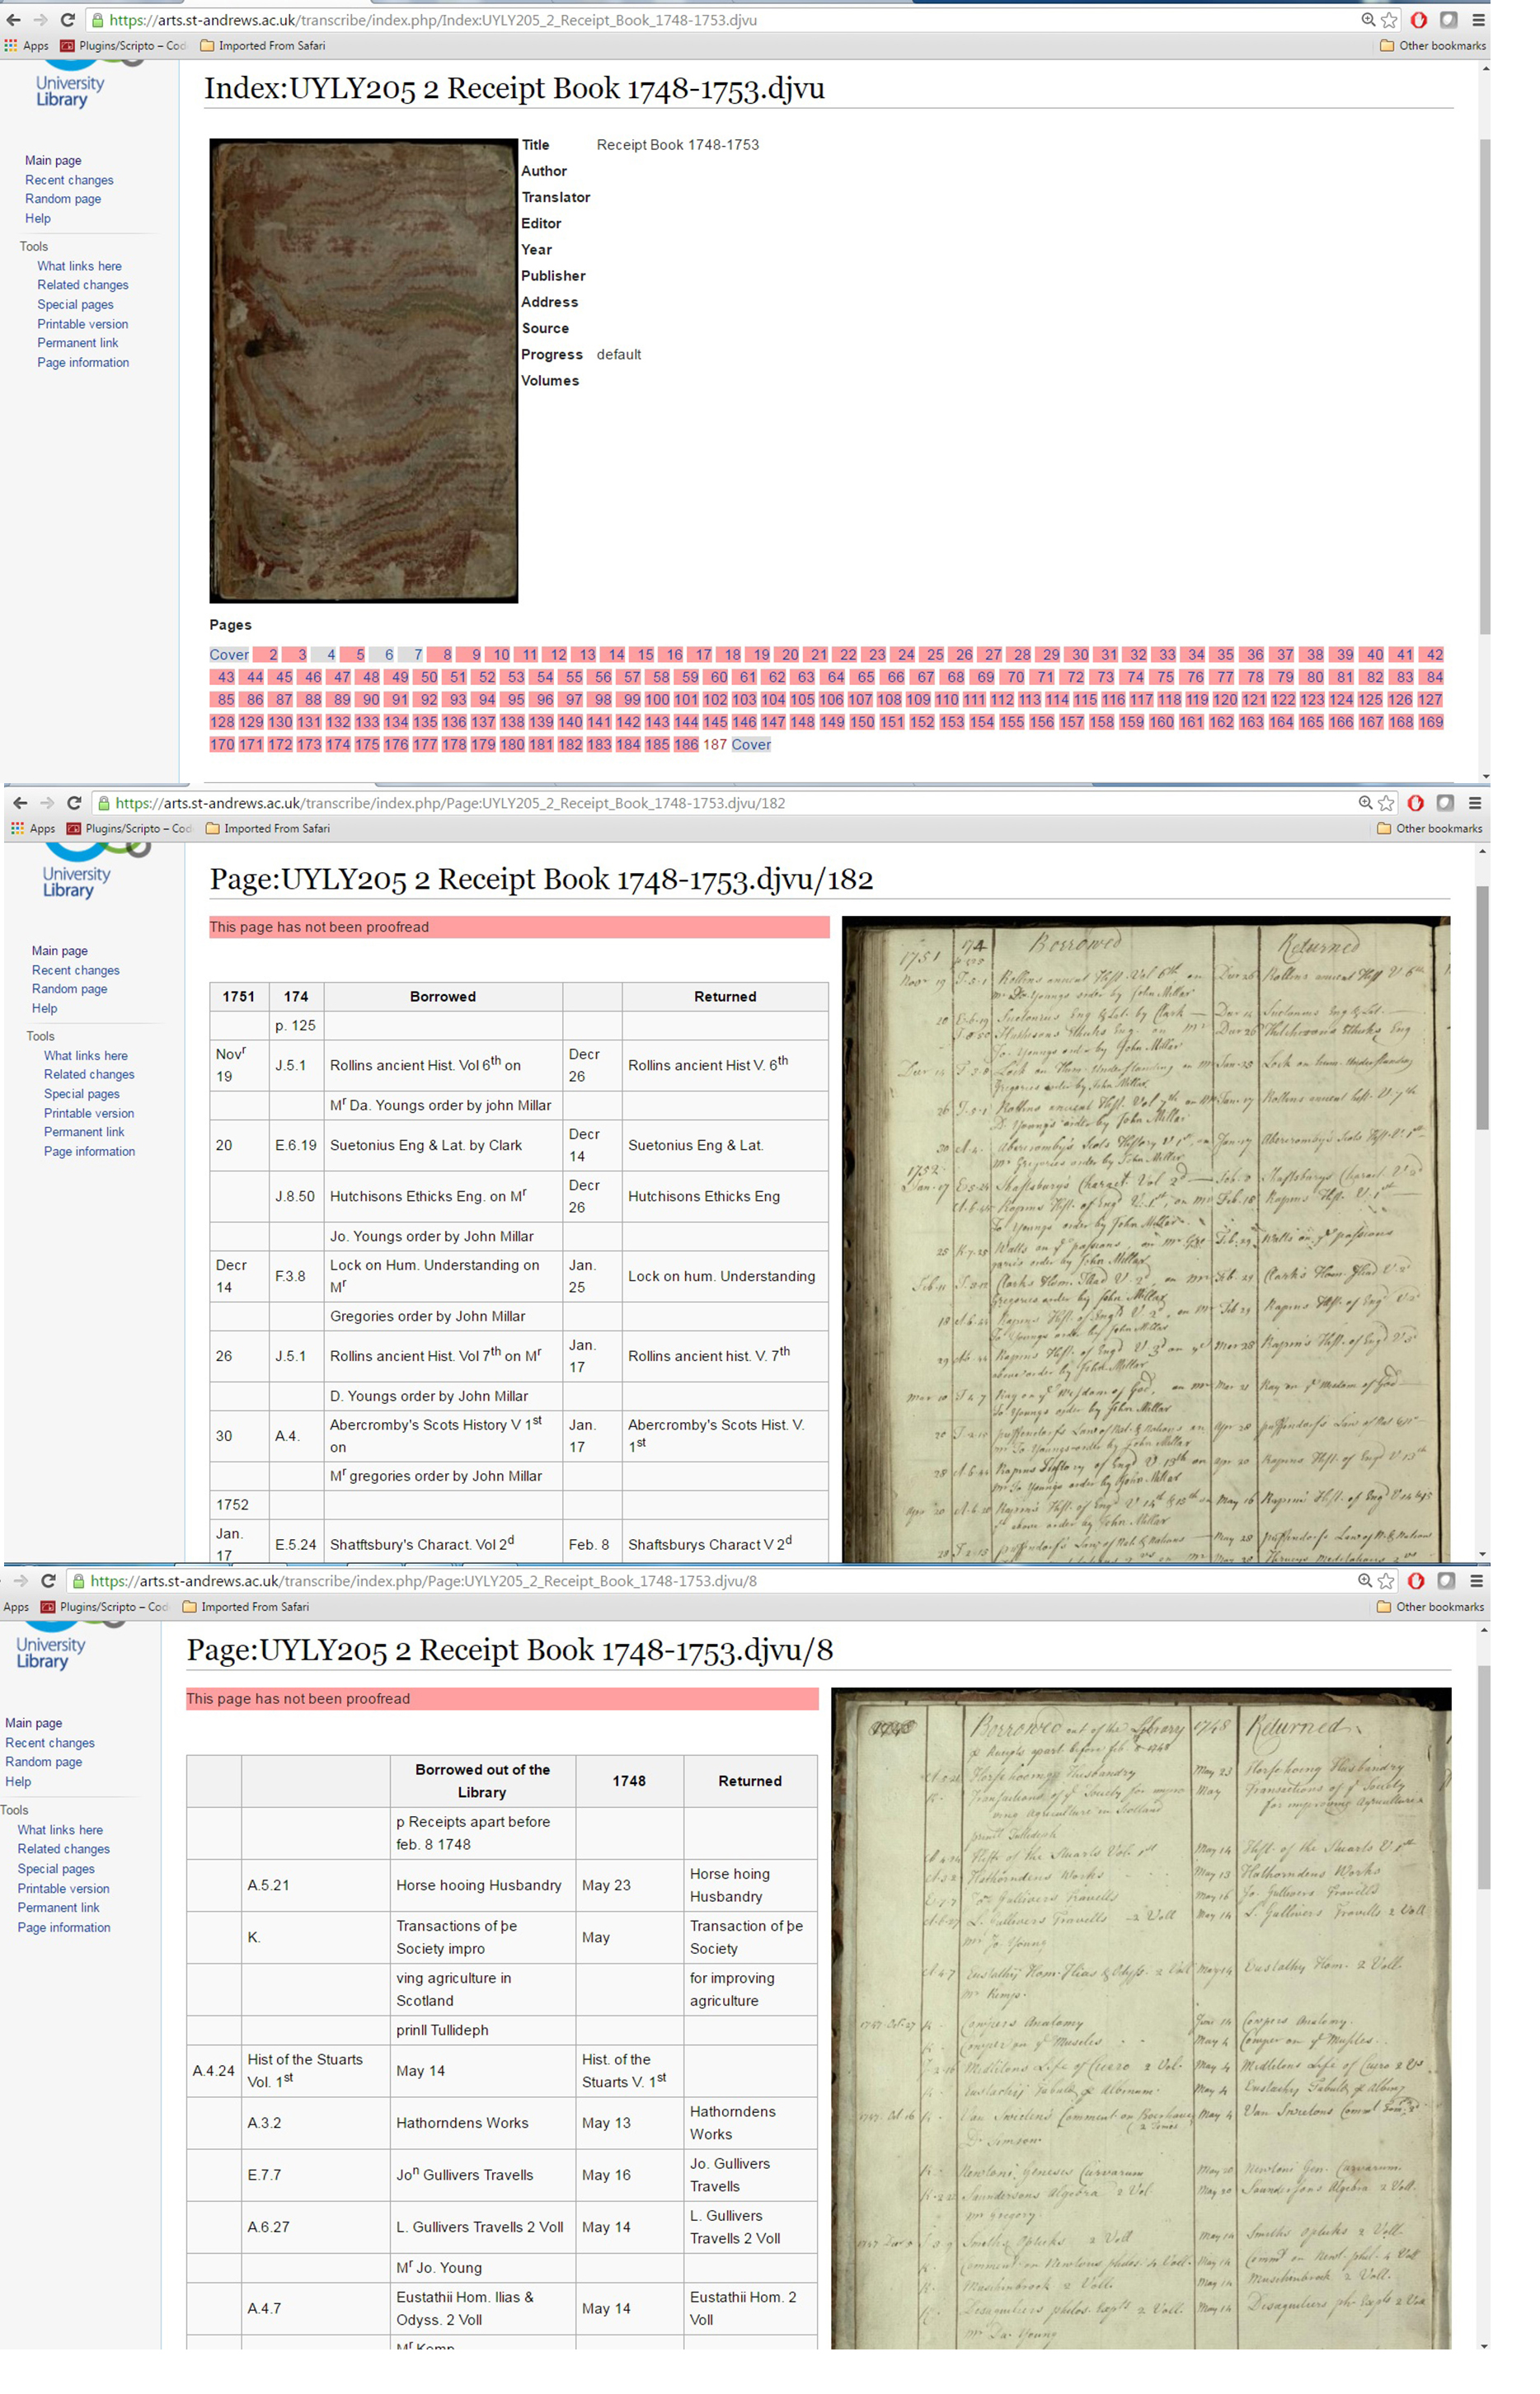 Screenshots of the online transcription tool